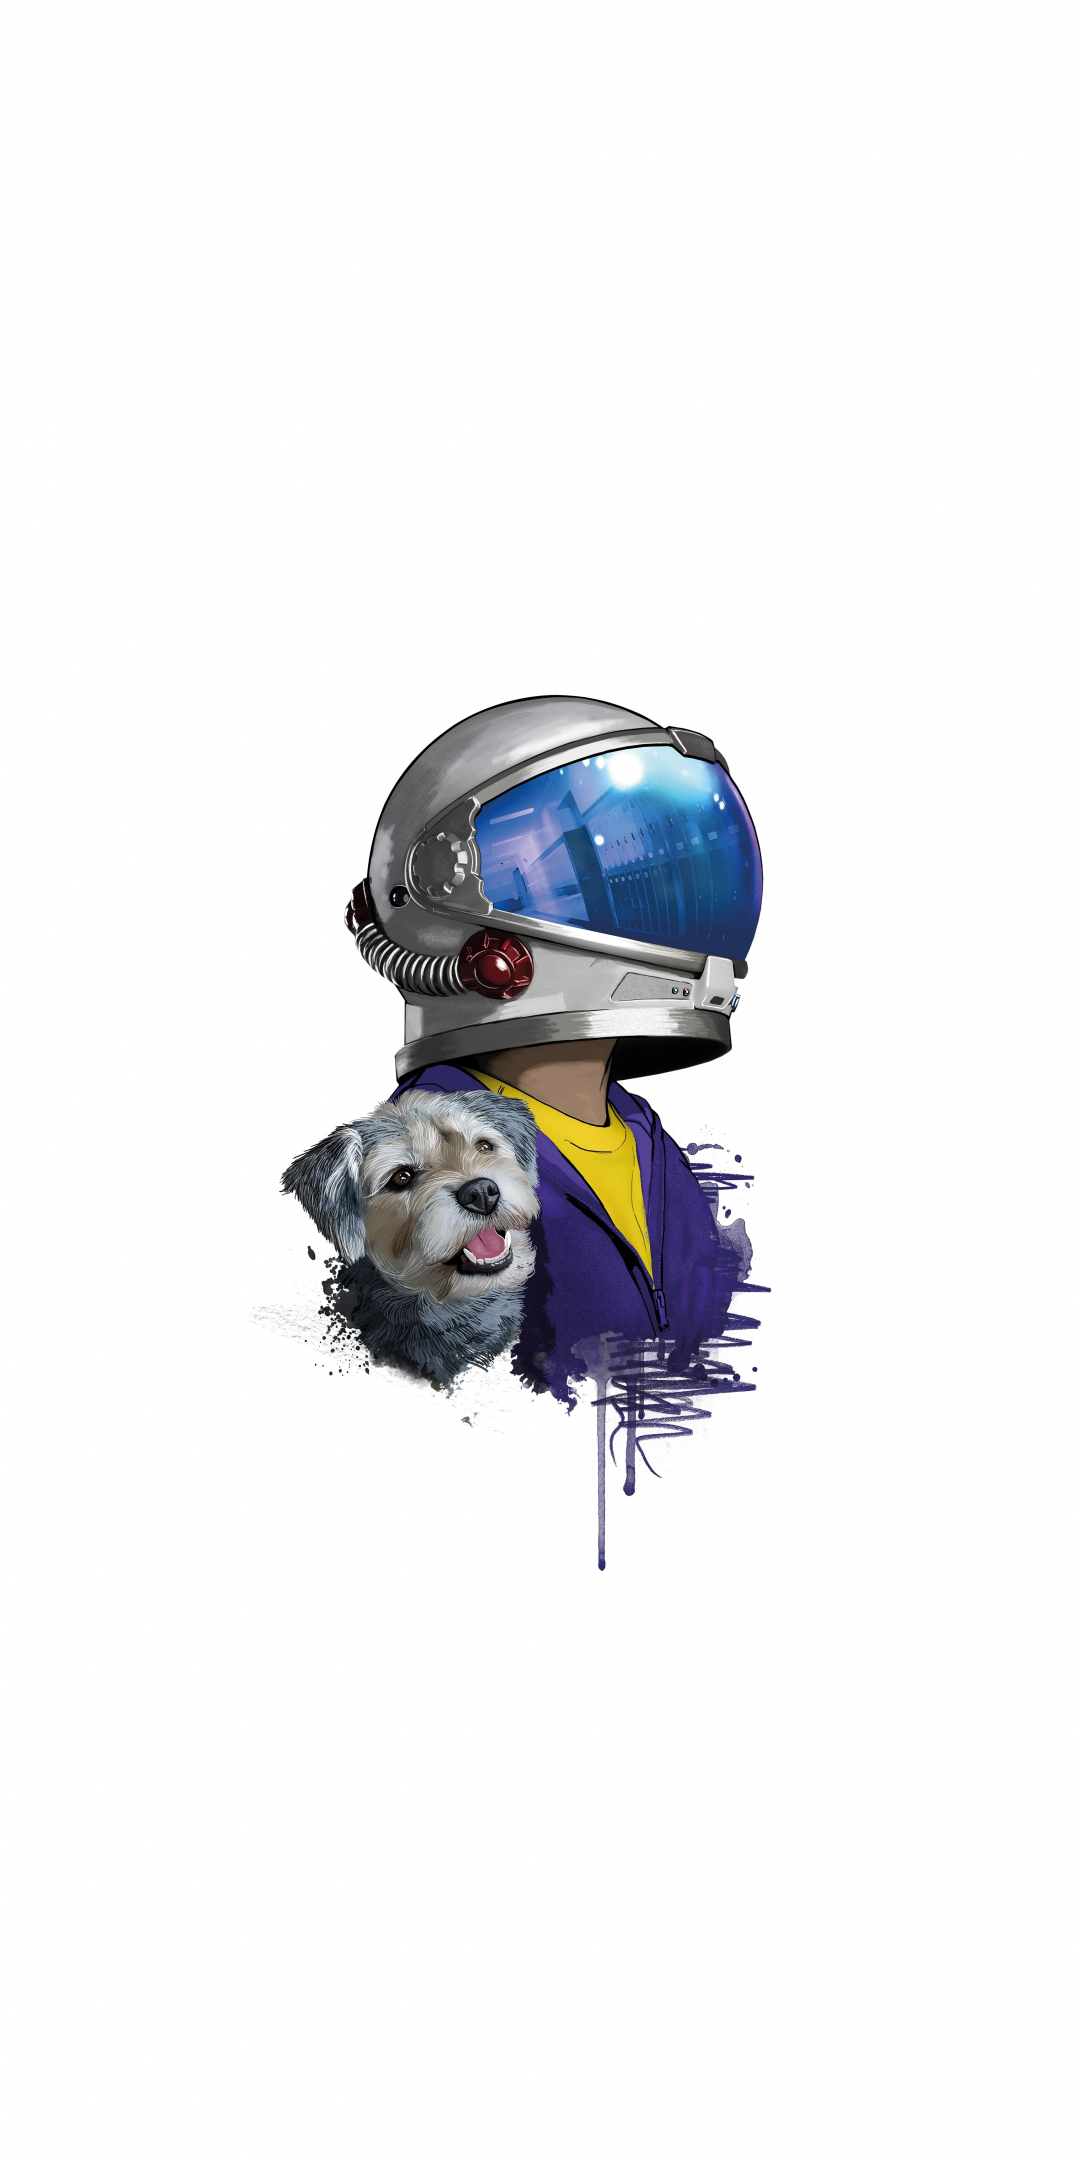 Helmet guy and dog, art, 1080x2160 wallpaper